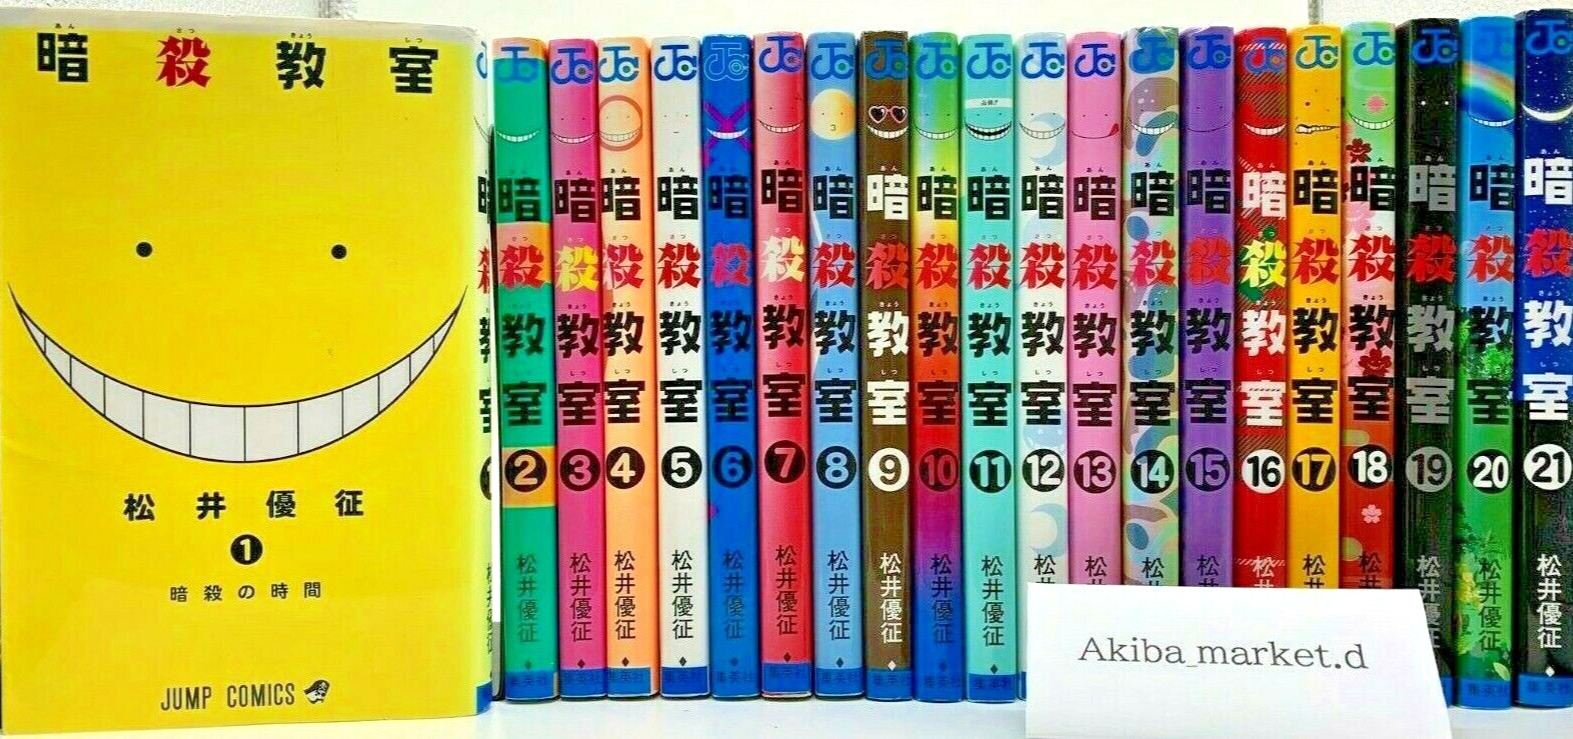 Assassination Classroom Japanese language Vol.1-21 Complete Set Manga comics